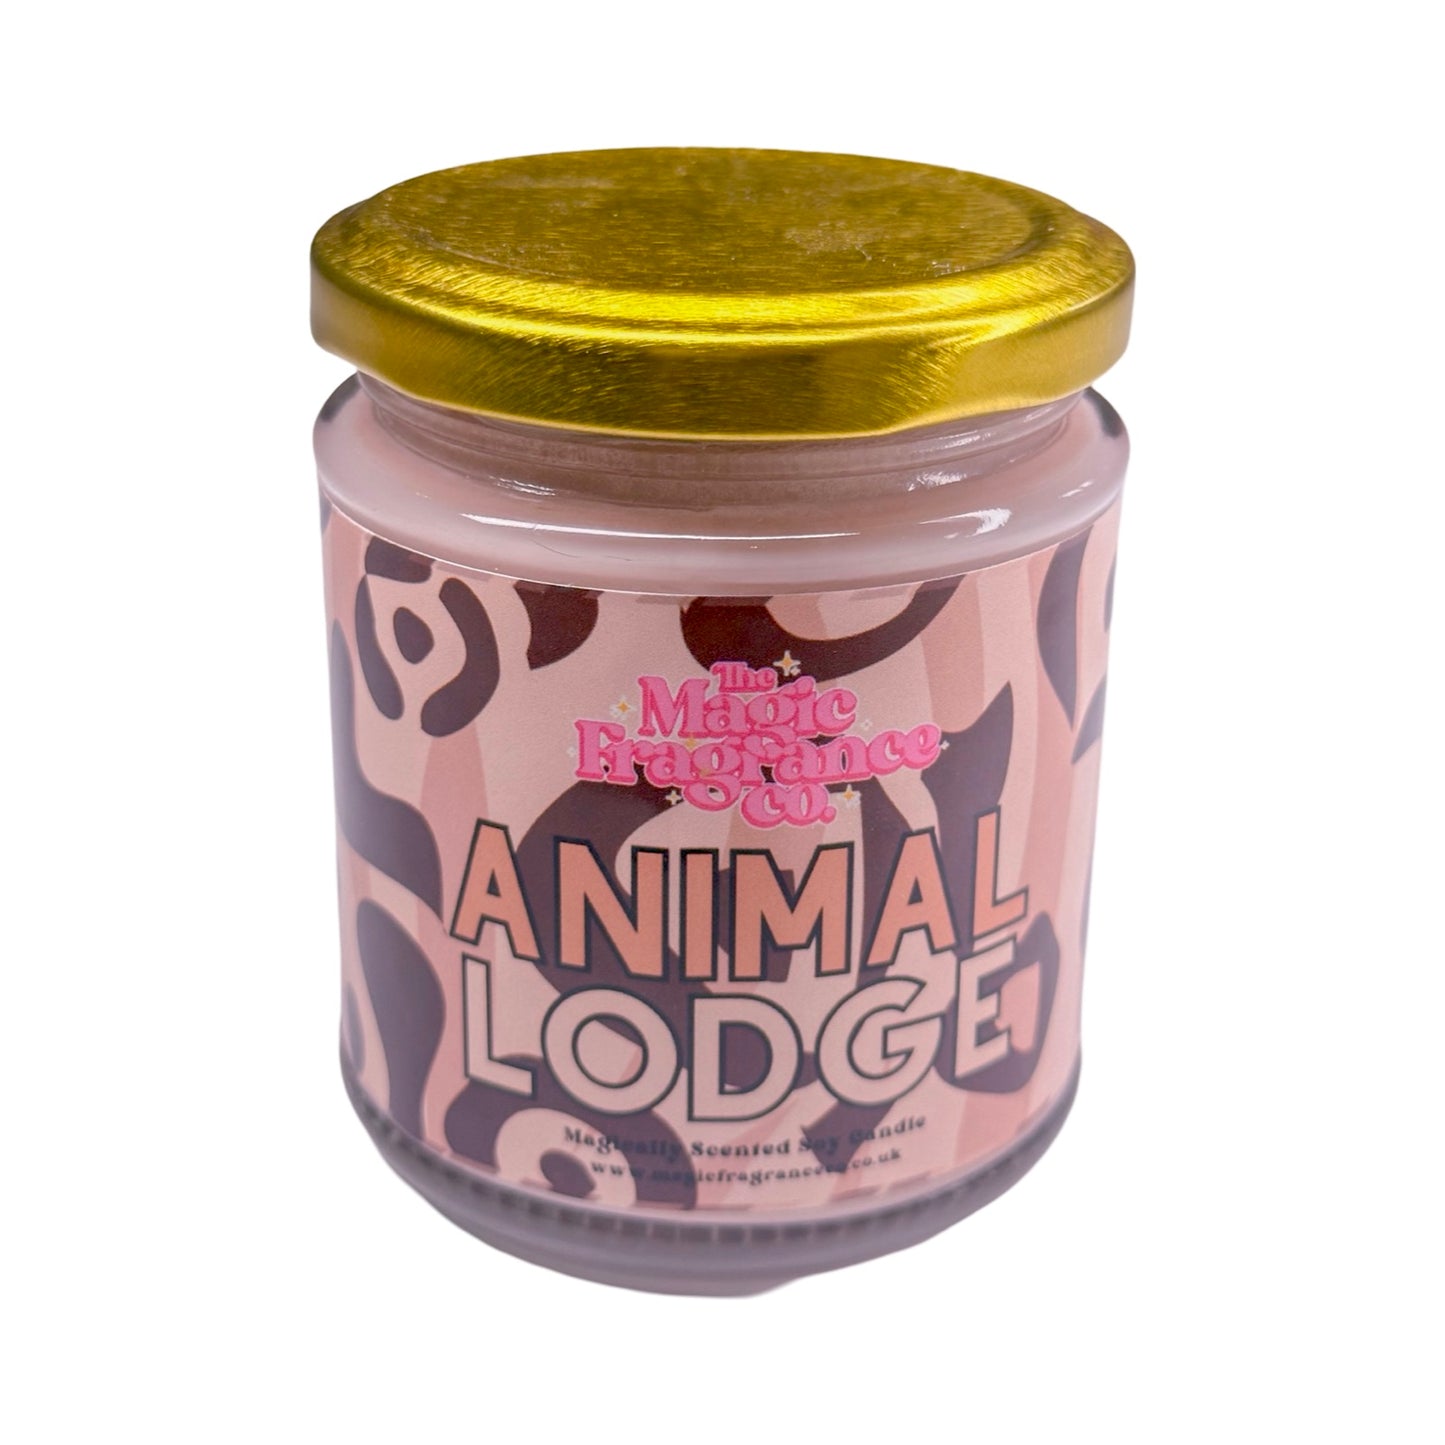 Animal Lodge Soy Candle